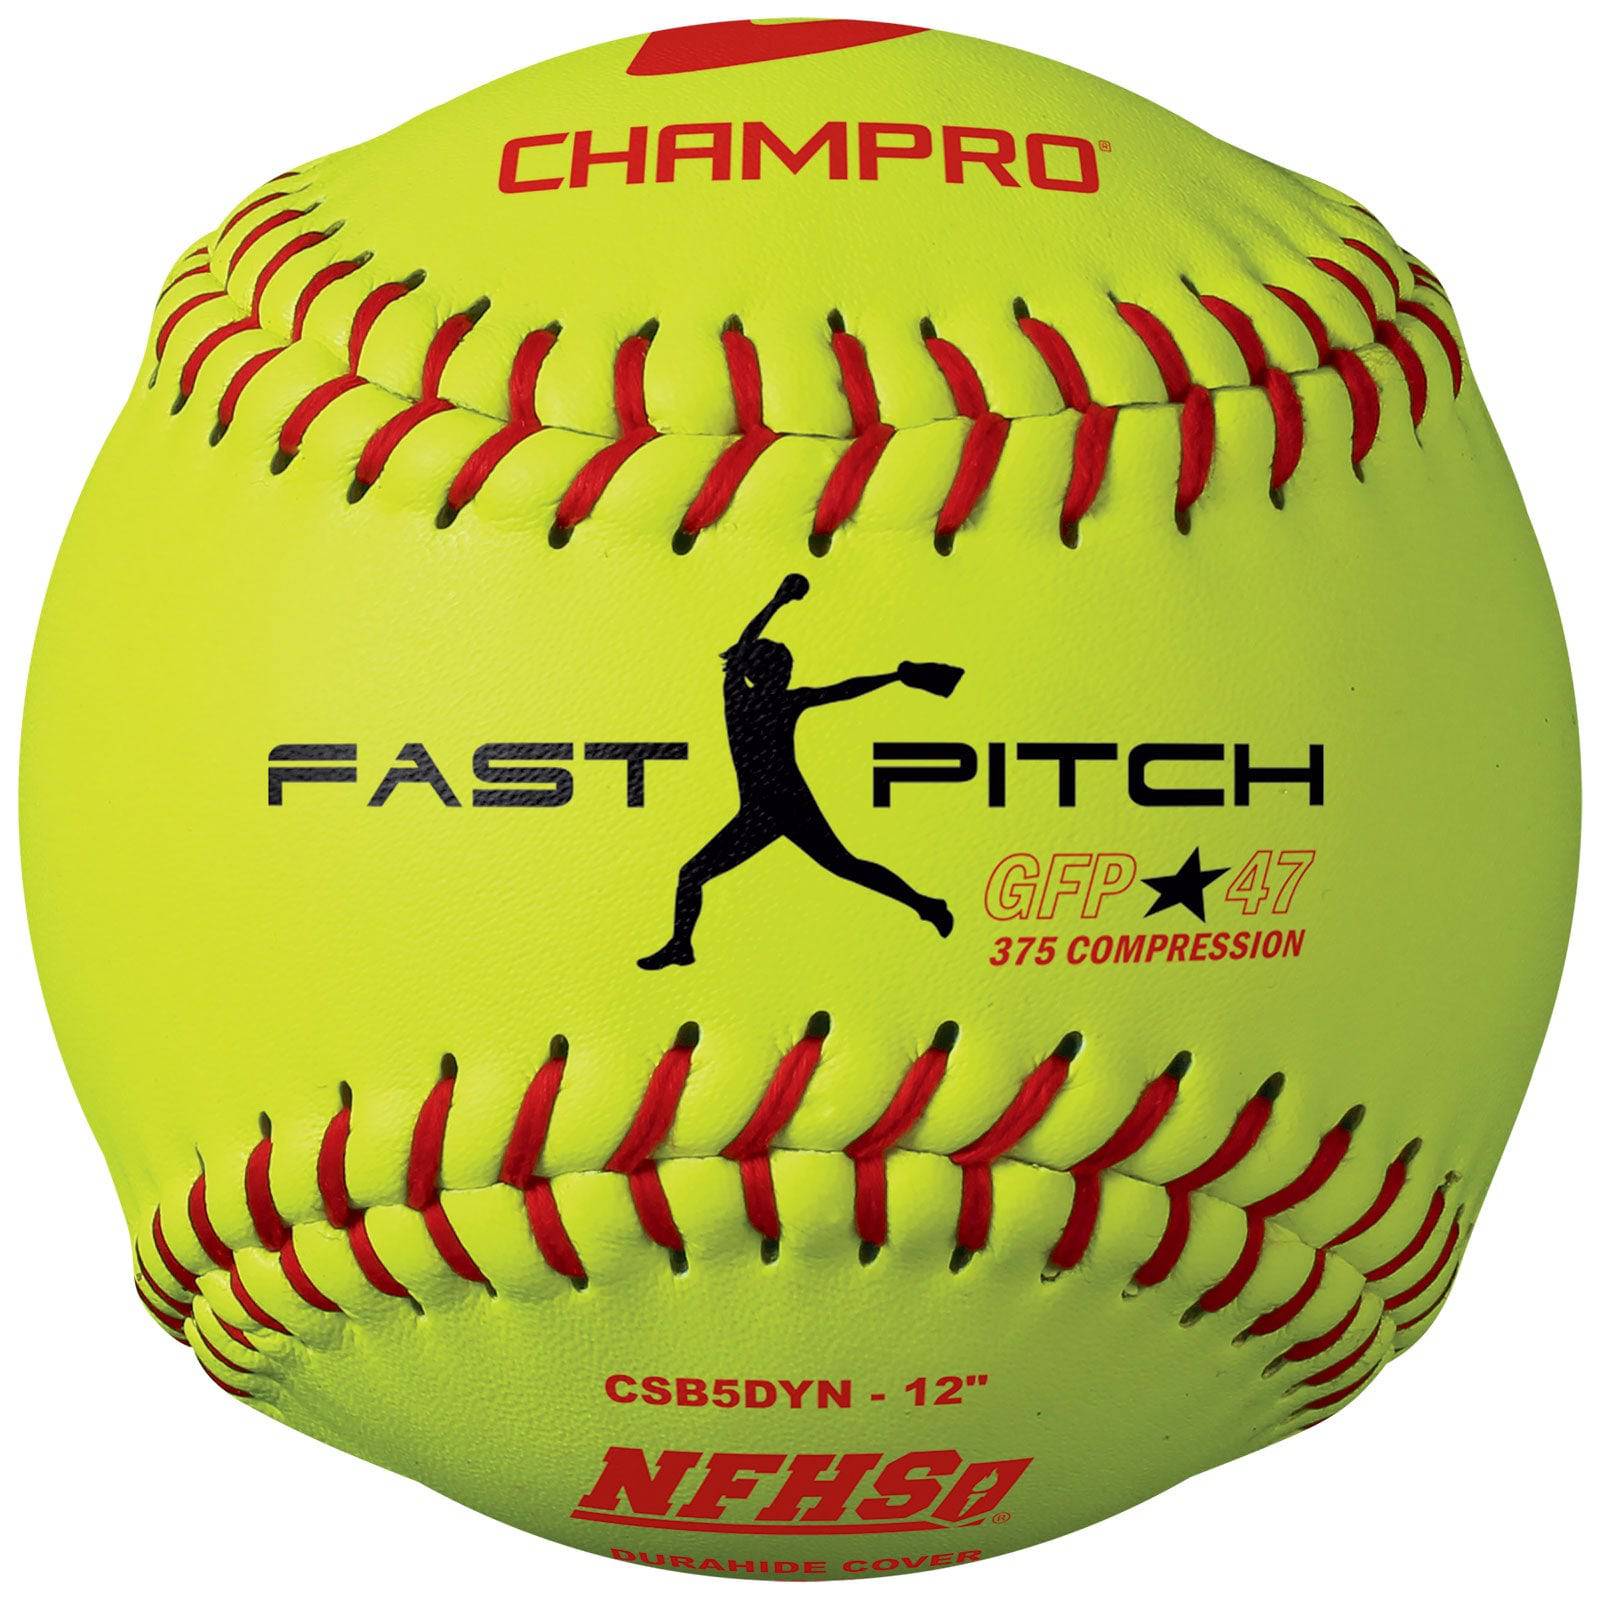 Champro 11-Inch And 12-Inch Fast Pitch Softballs